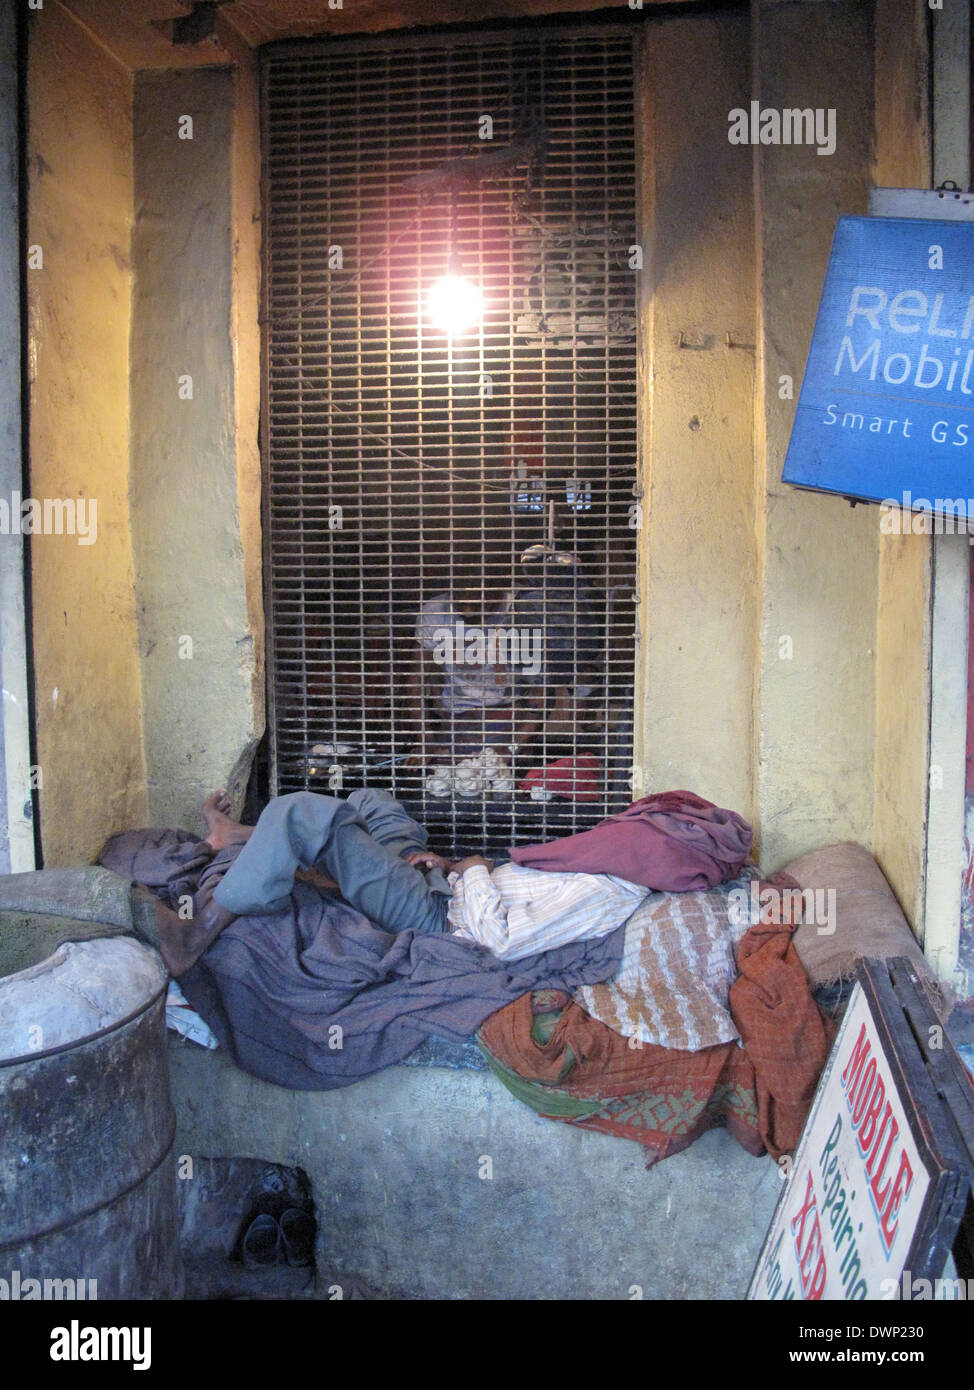 Streets of Kolkata, man sleeping on the streets of Kolkata,India on January 25, 2009. Stock Photo